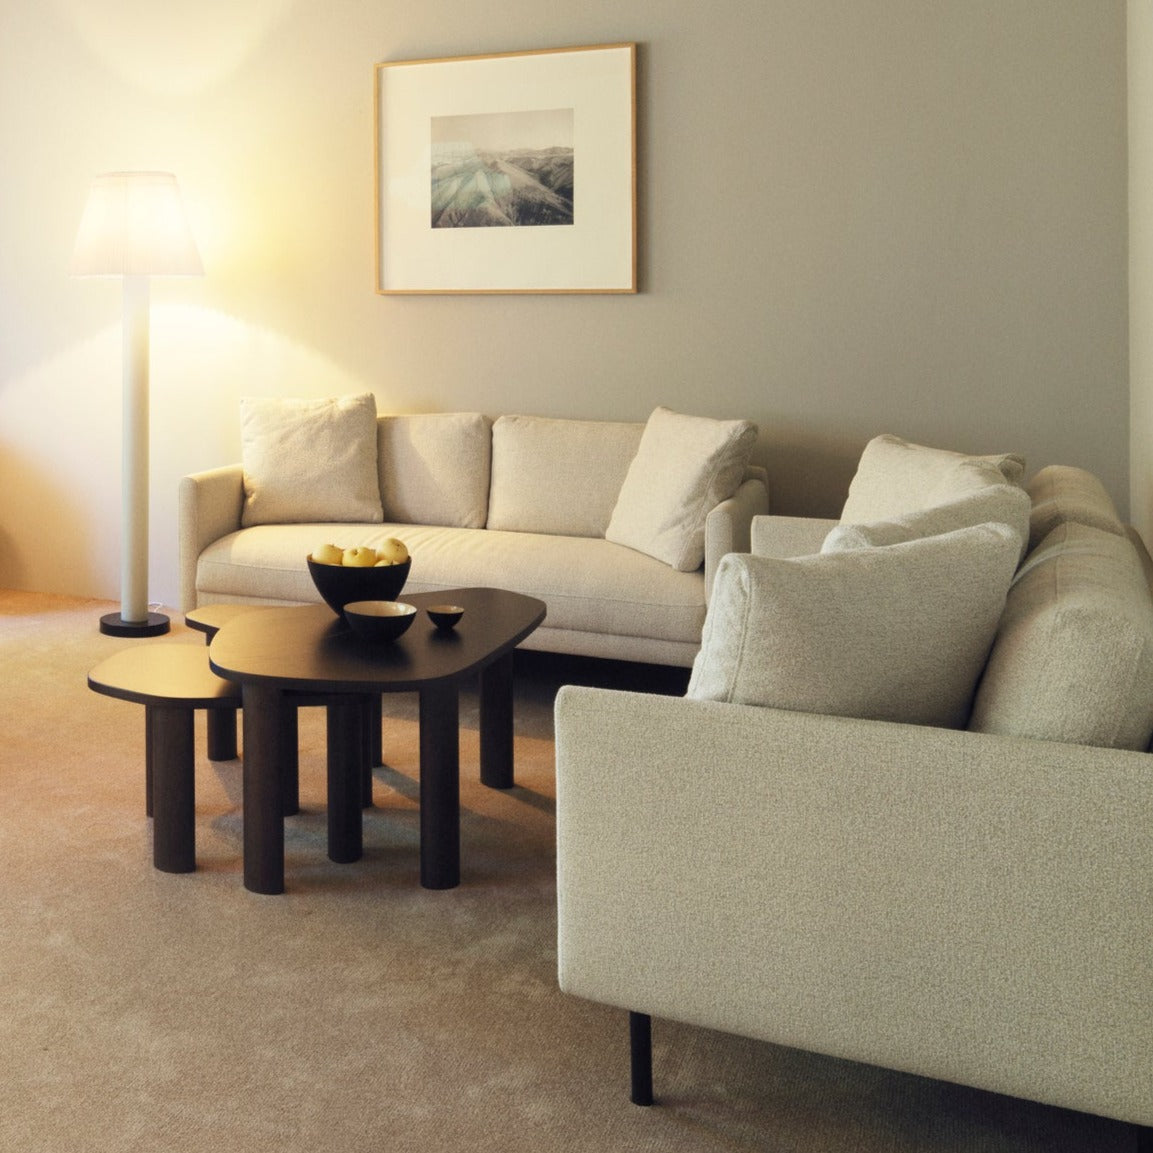 Normann Copenhagen Rar Sofa Cushion at someday designs. #colour_venezia-off-white